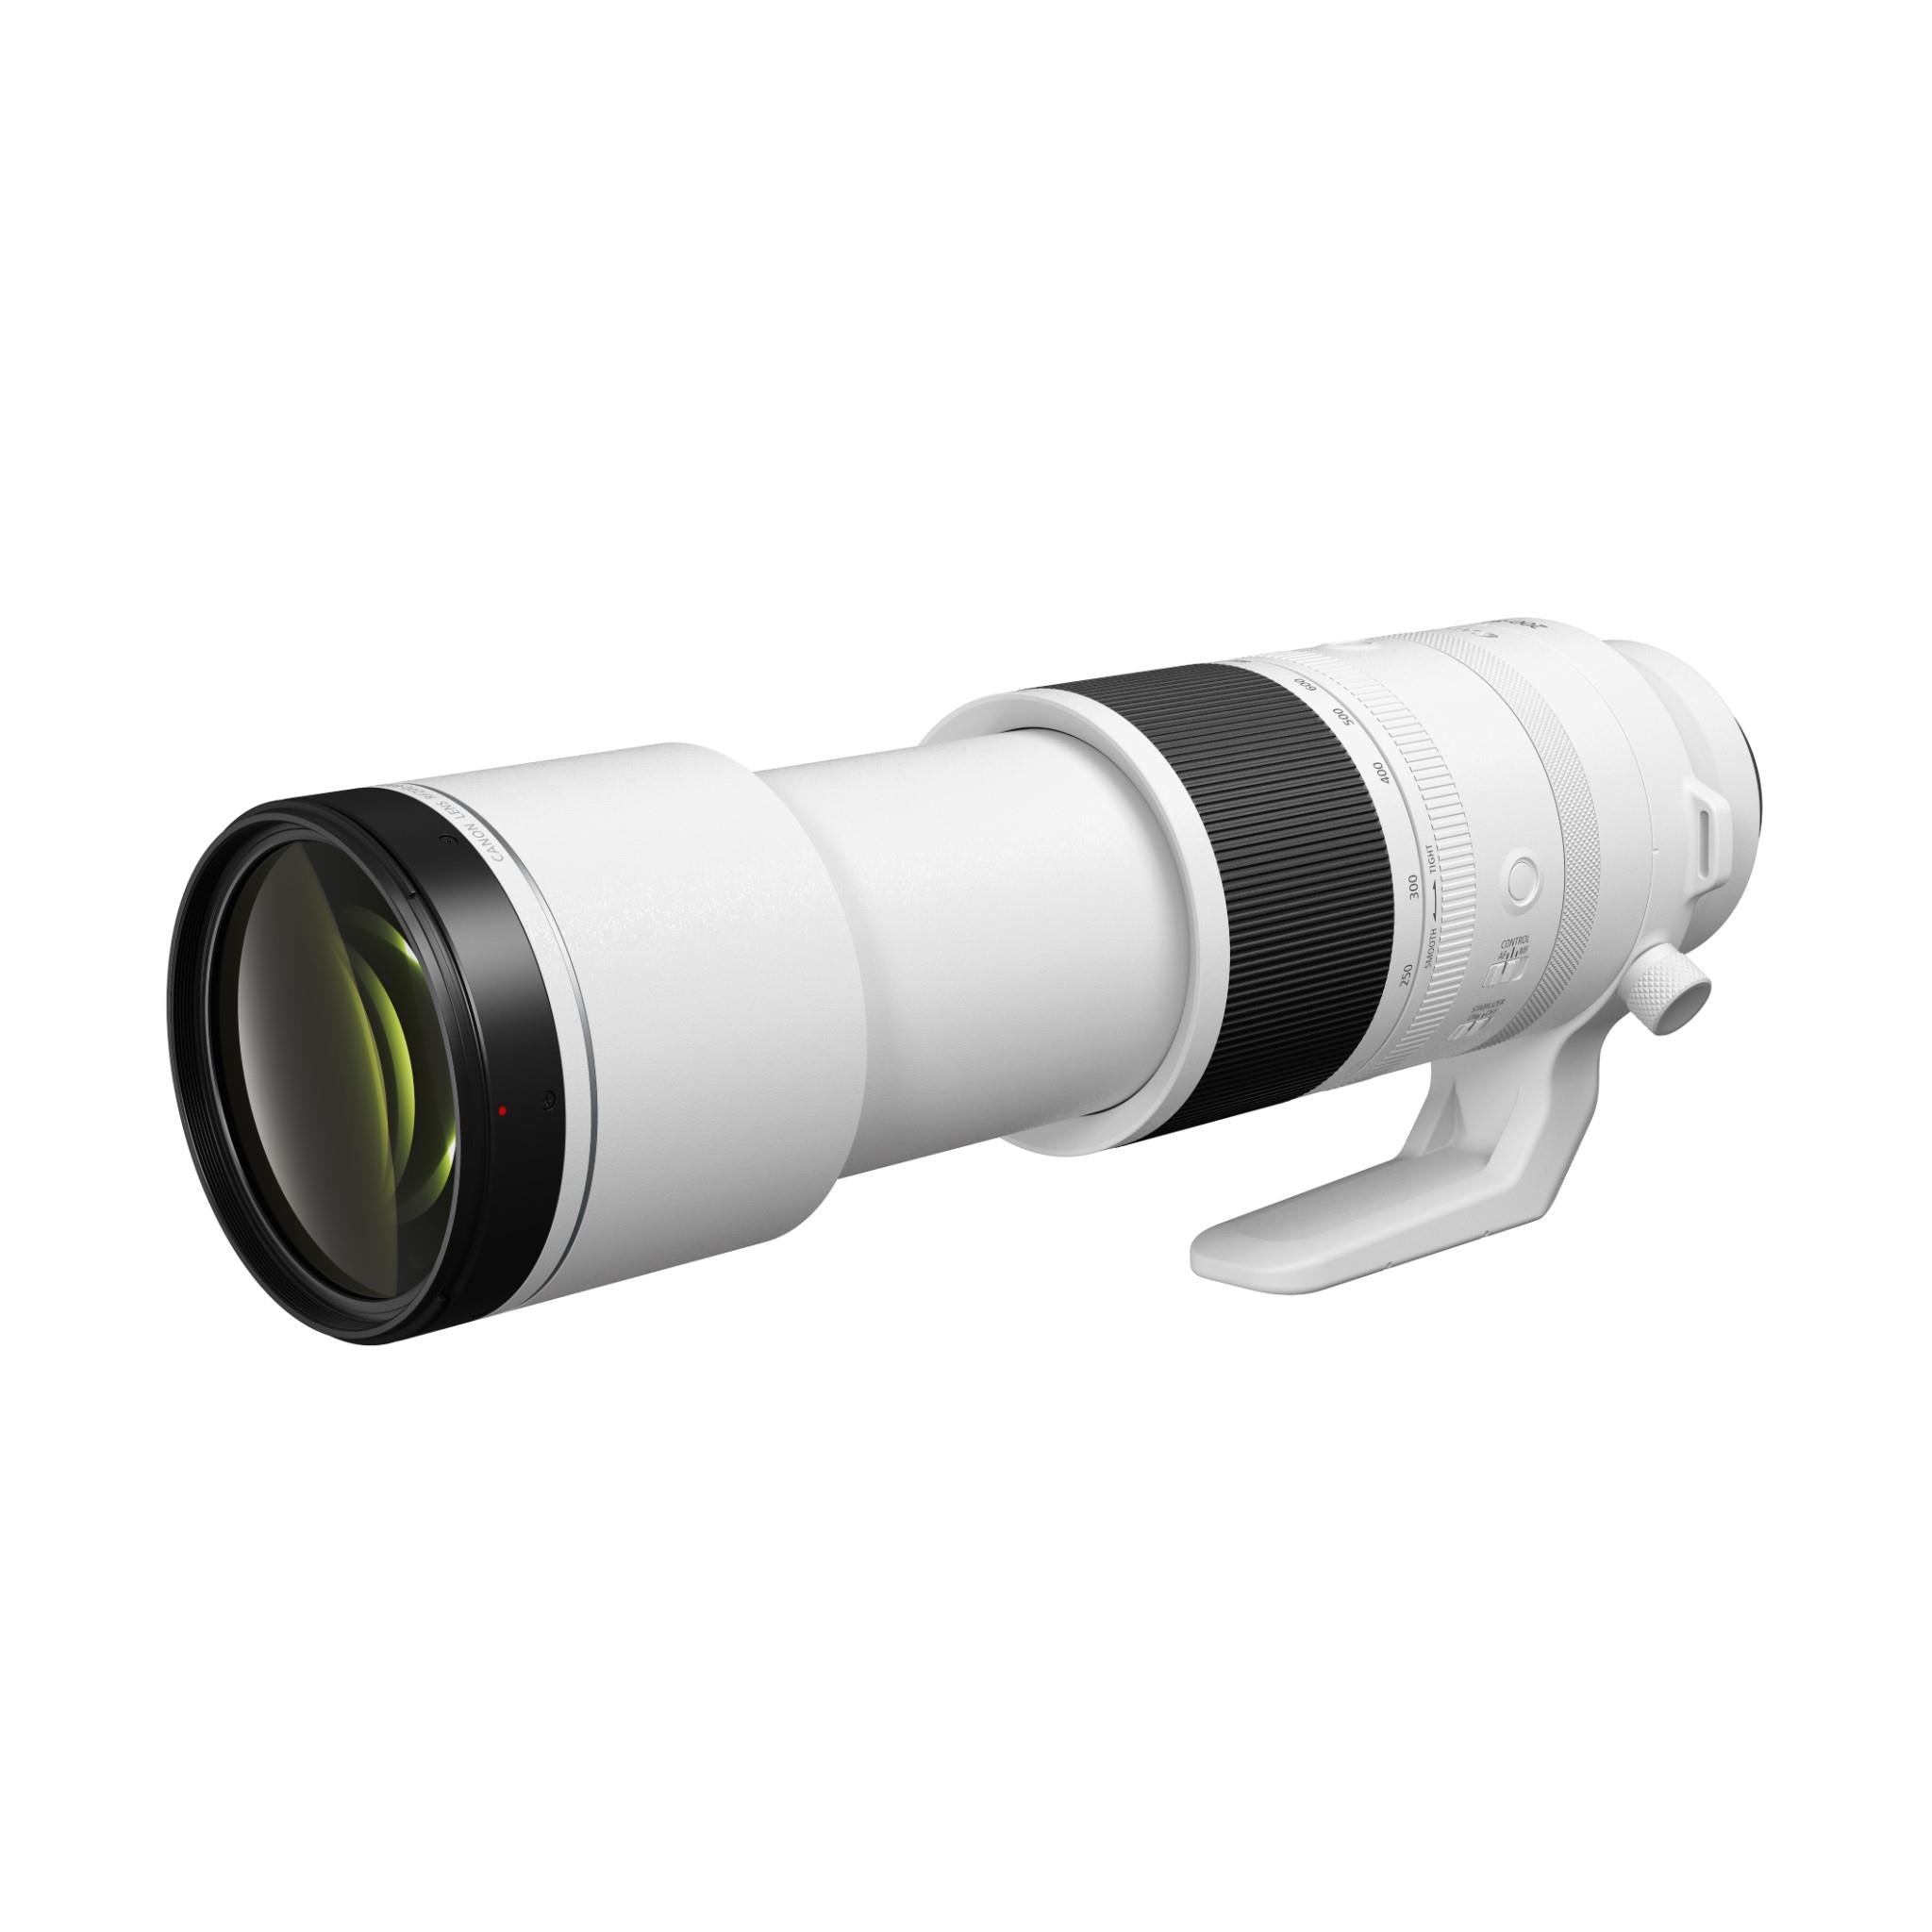 canon rf 200-800mm f/6.3-9 is usm lens